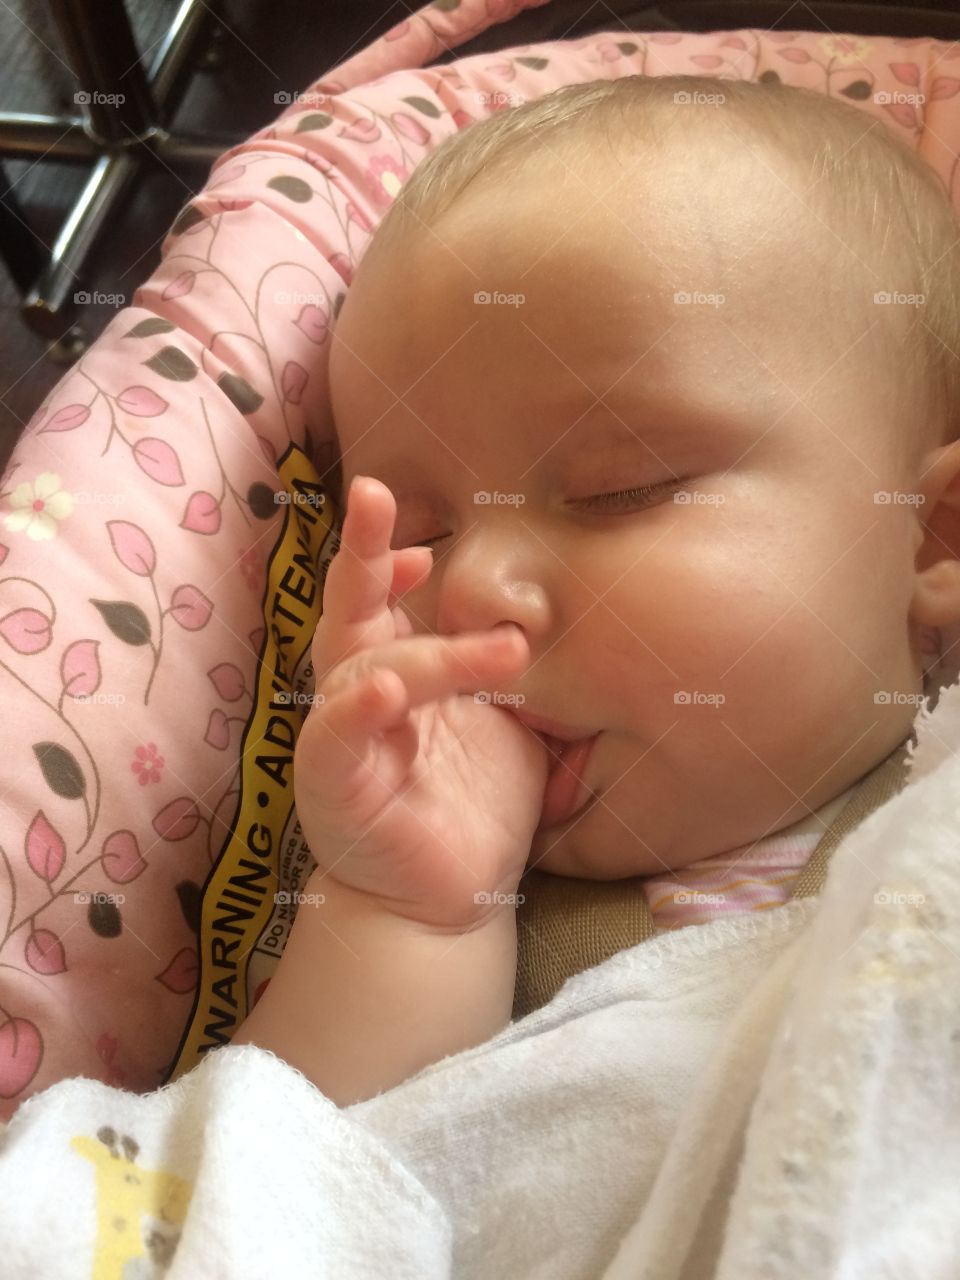 Little cute baby sucking thumb while sleeping